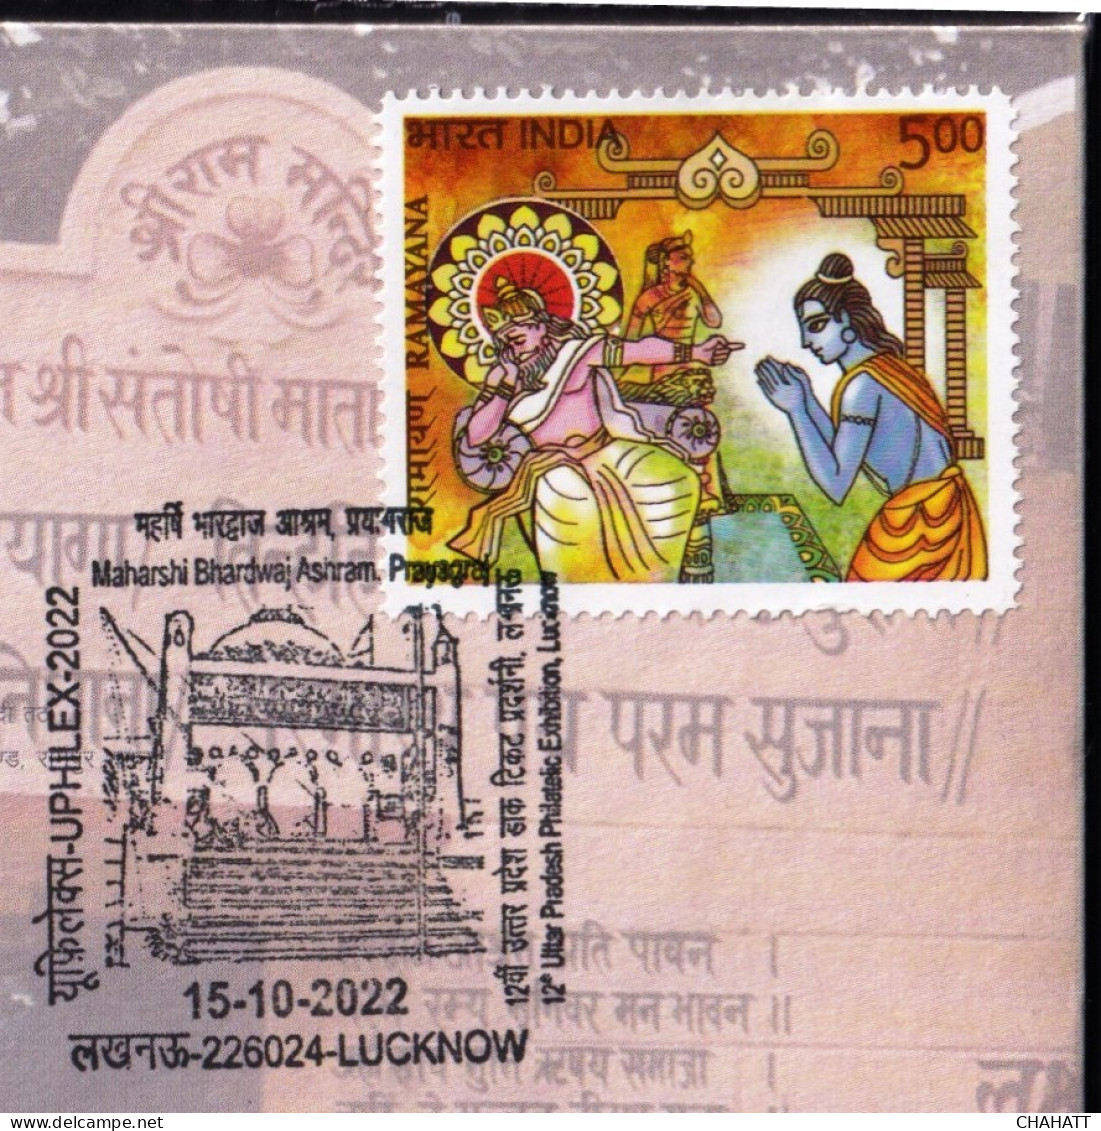 HINDUISM - RAMAYAN- MAHARSHI BHARDWAJ ASHRAM, PRAYAGRAJ - PICTORIAL CANCELLATION - SPECIAL COVER - INDIA -2022- BX4-23 - Hinduismus